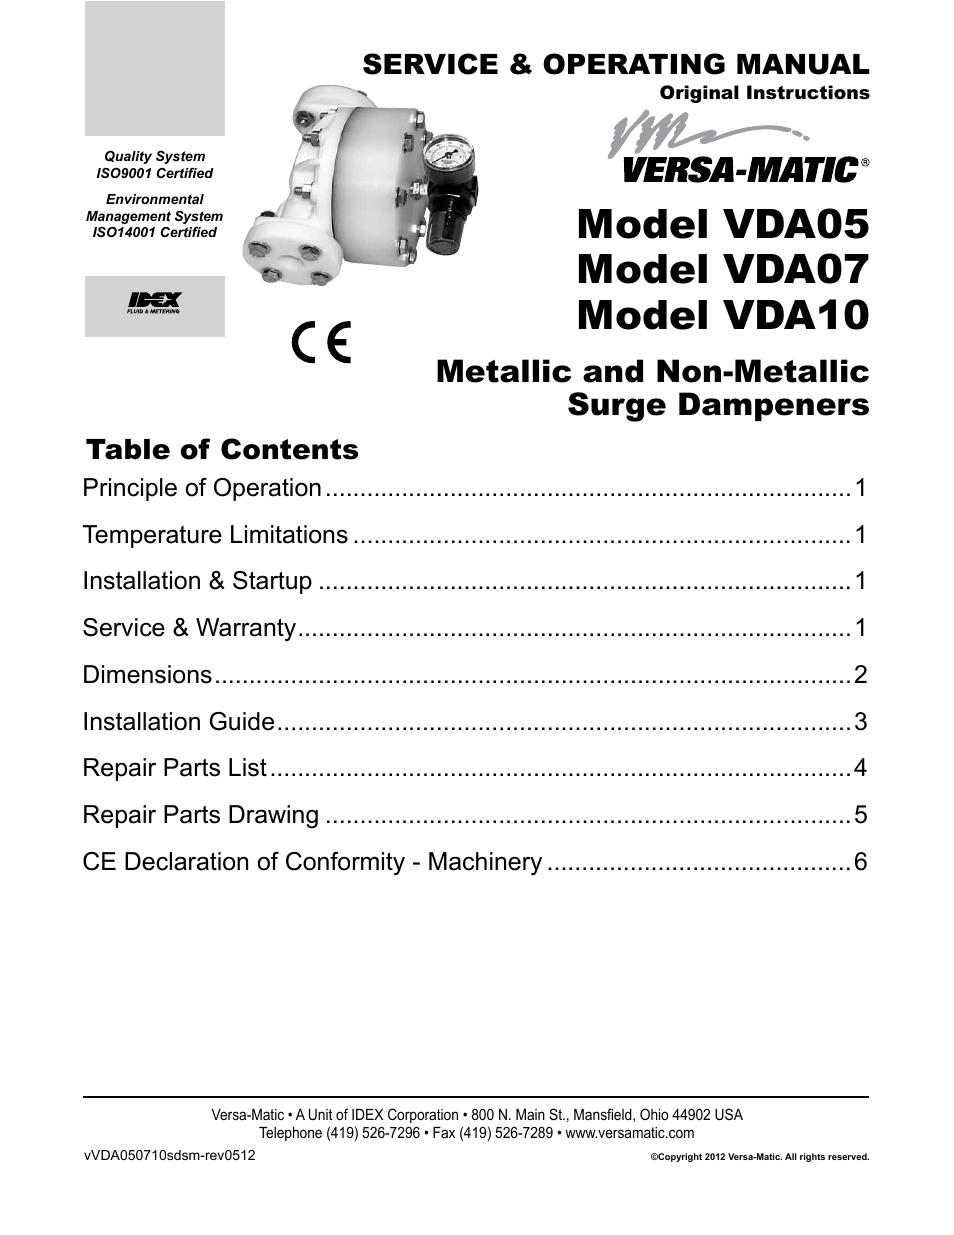 VDA10  Metallic and Non-Metallic Surge Dampeners